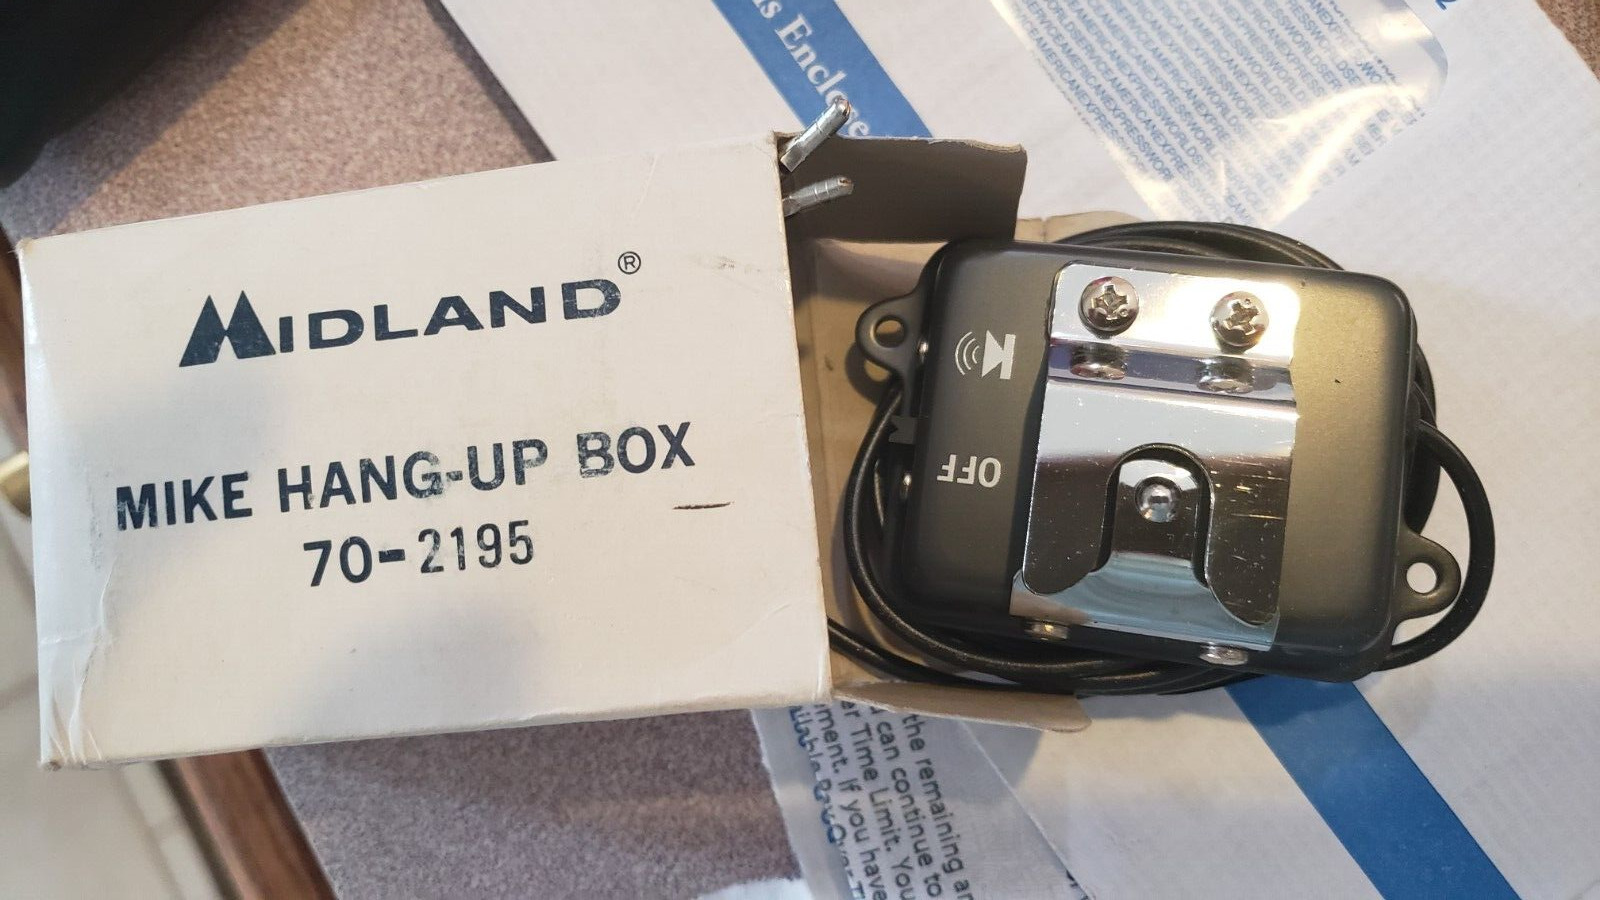 Midland NEW RADIO New Old Stock RARE Hang Up Box w/ wiring  # 70-2195